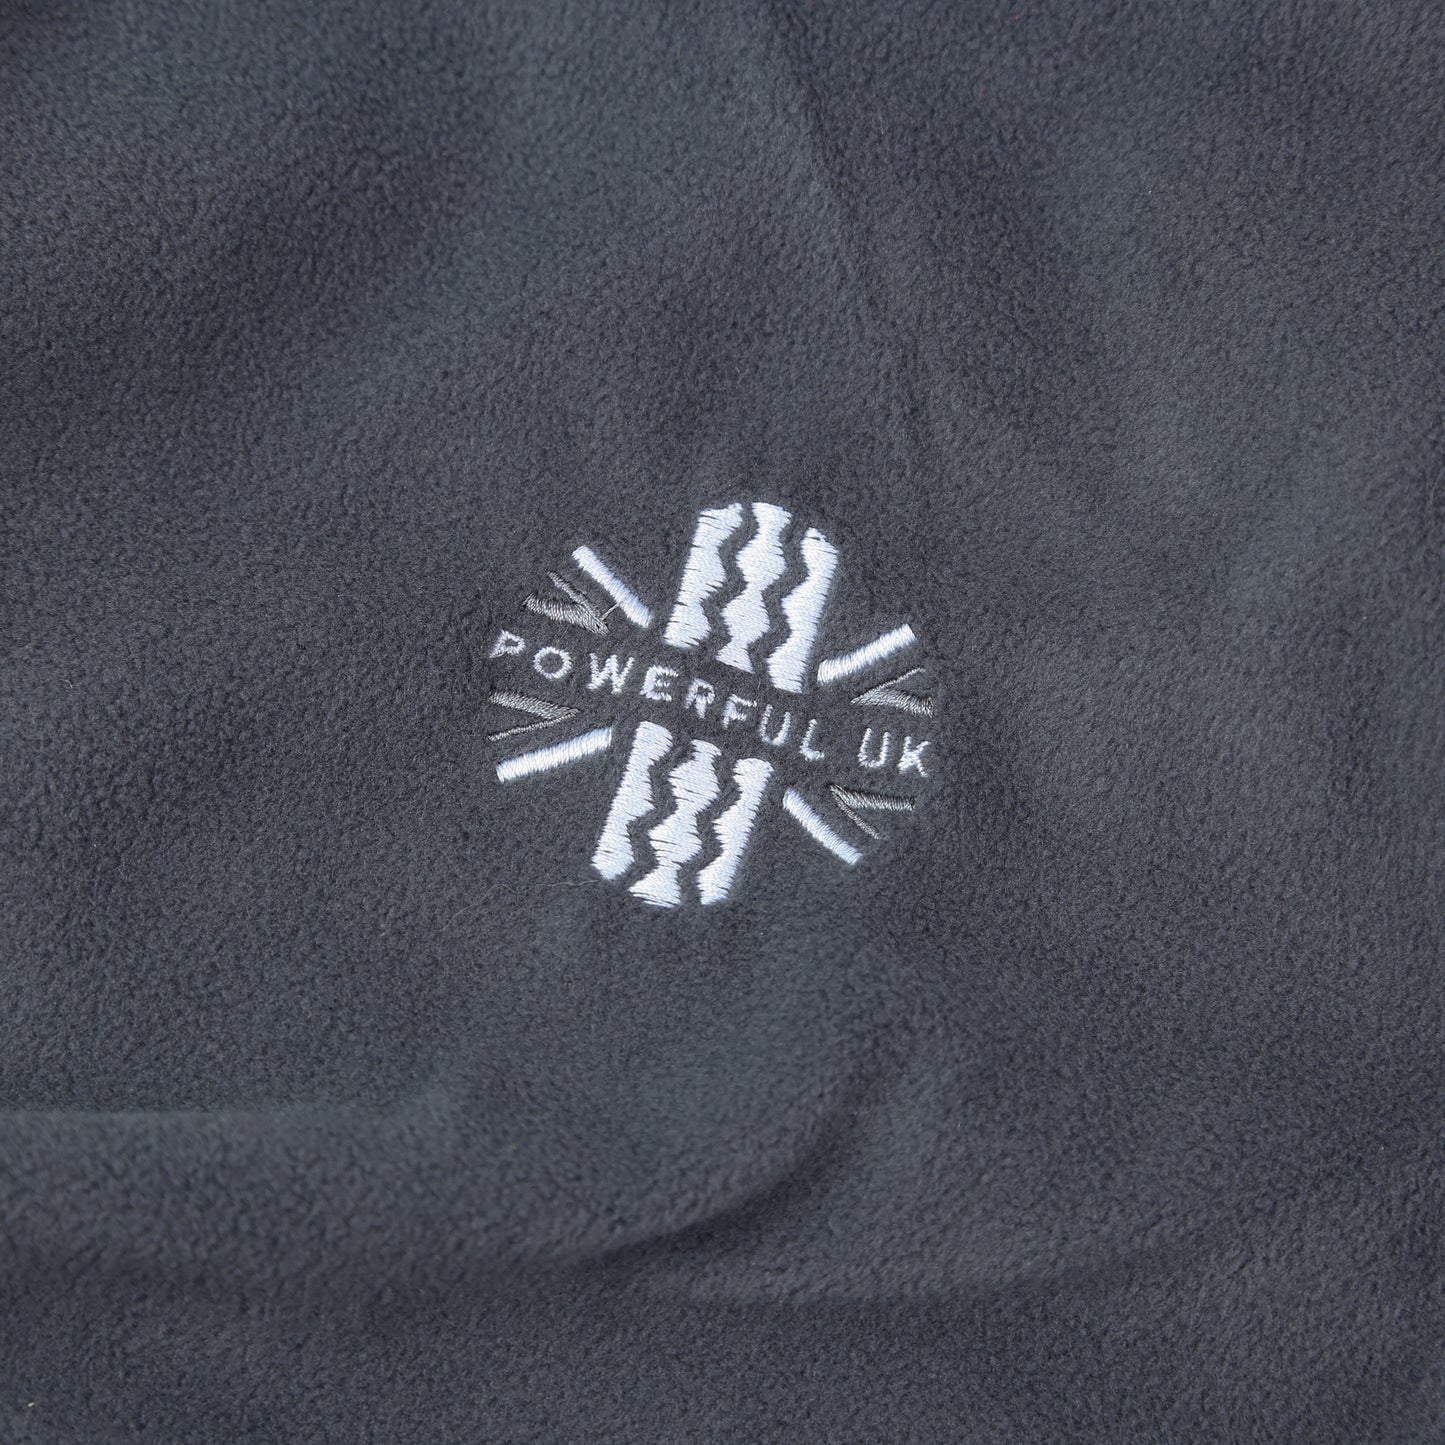 Embroidered Fleece Powerful UK Ltd "Merch" - Seal Grey - XXL